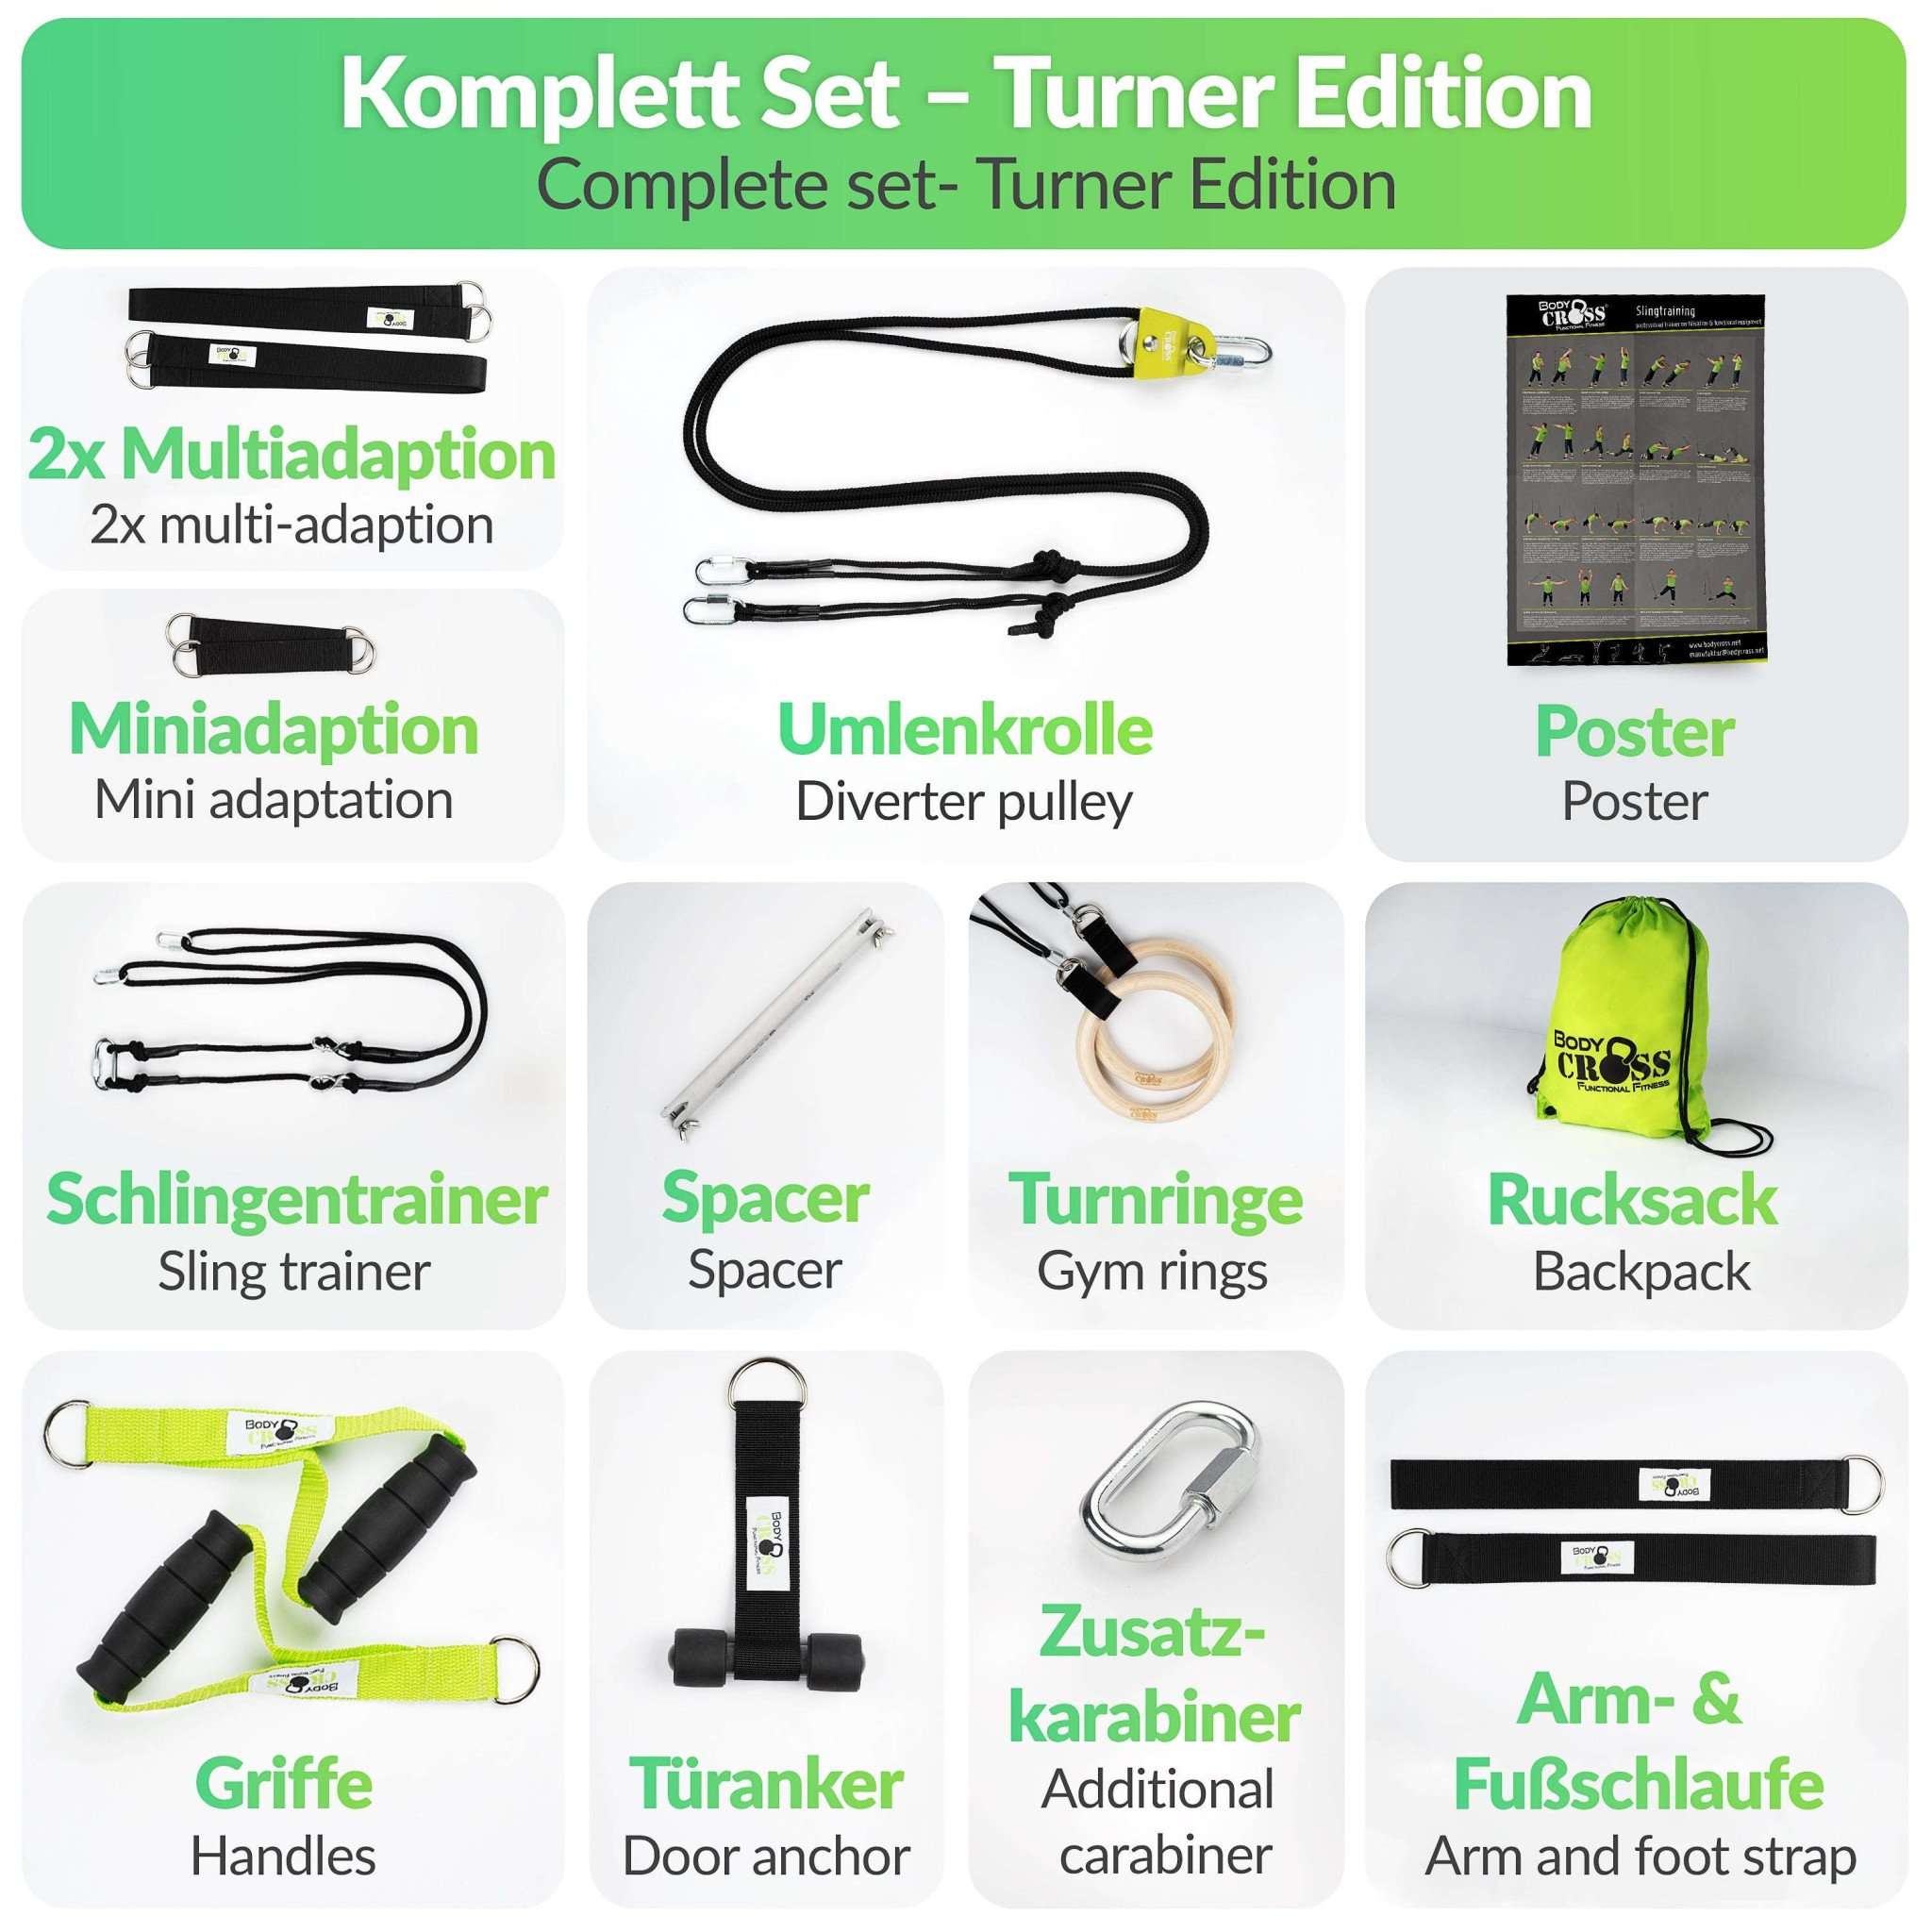 Slingtrainer Set | Turner Edition